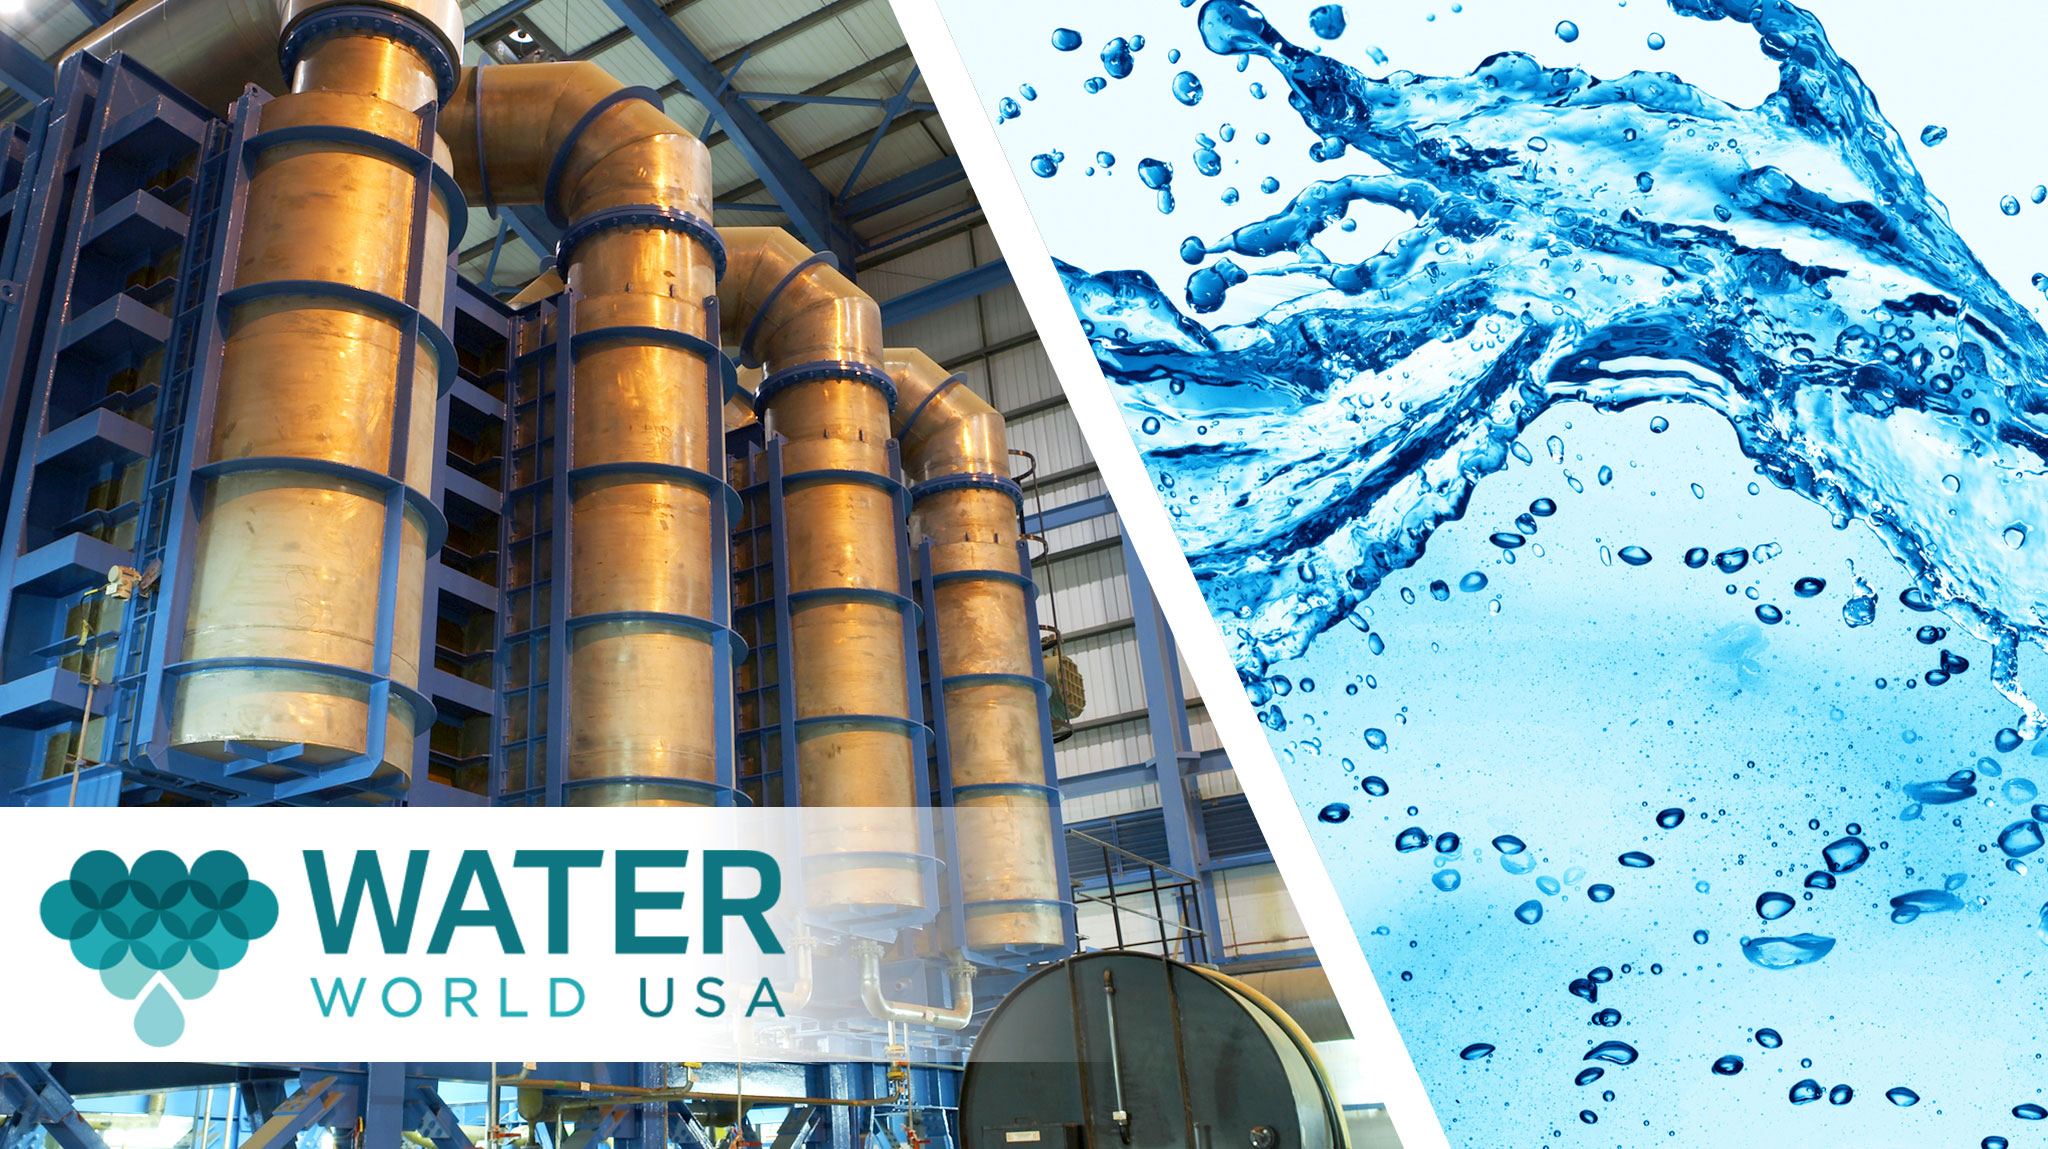 WaterWorld USA - Desalination